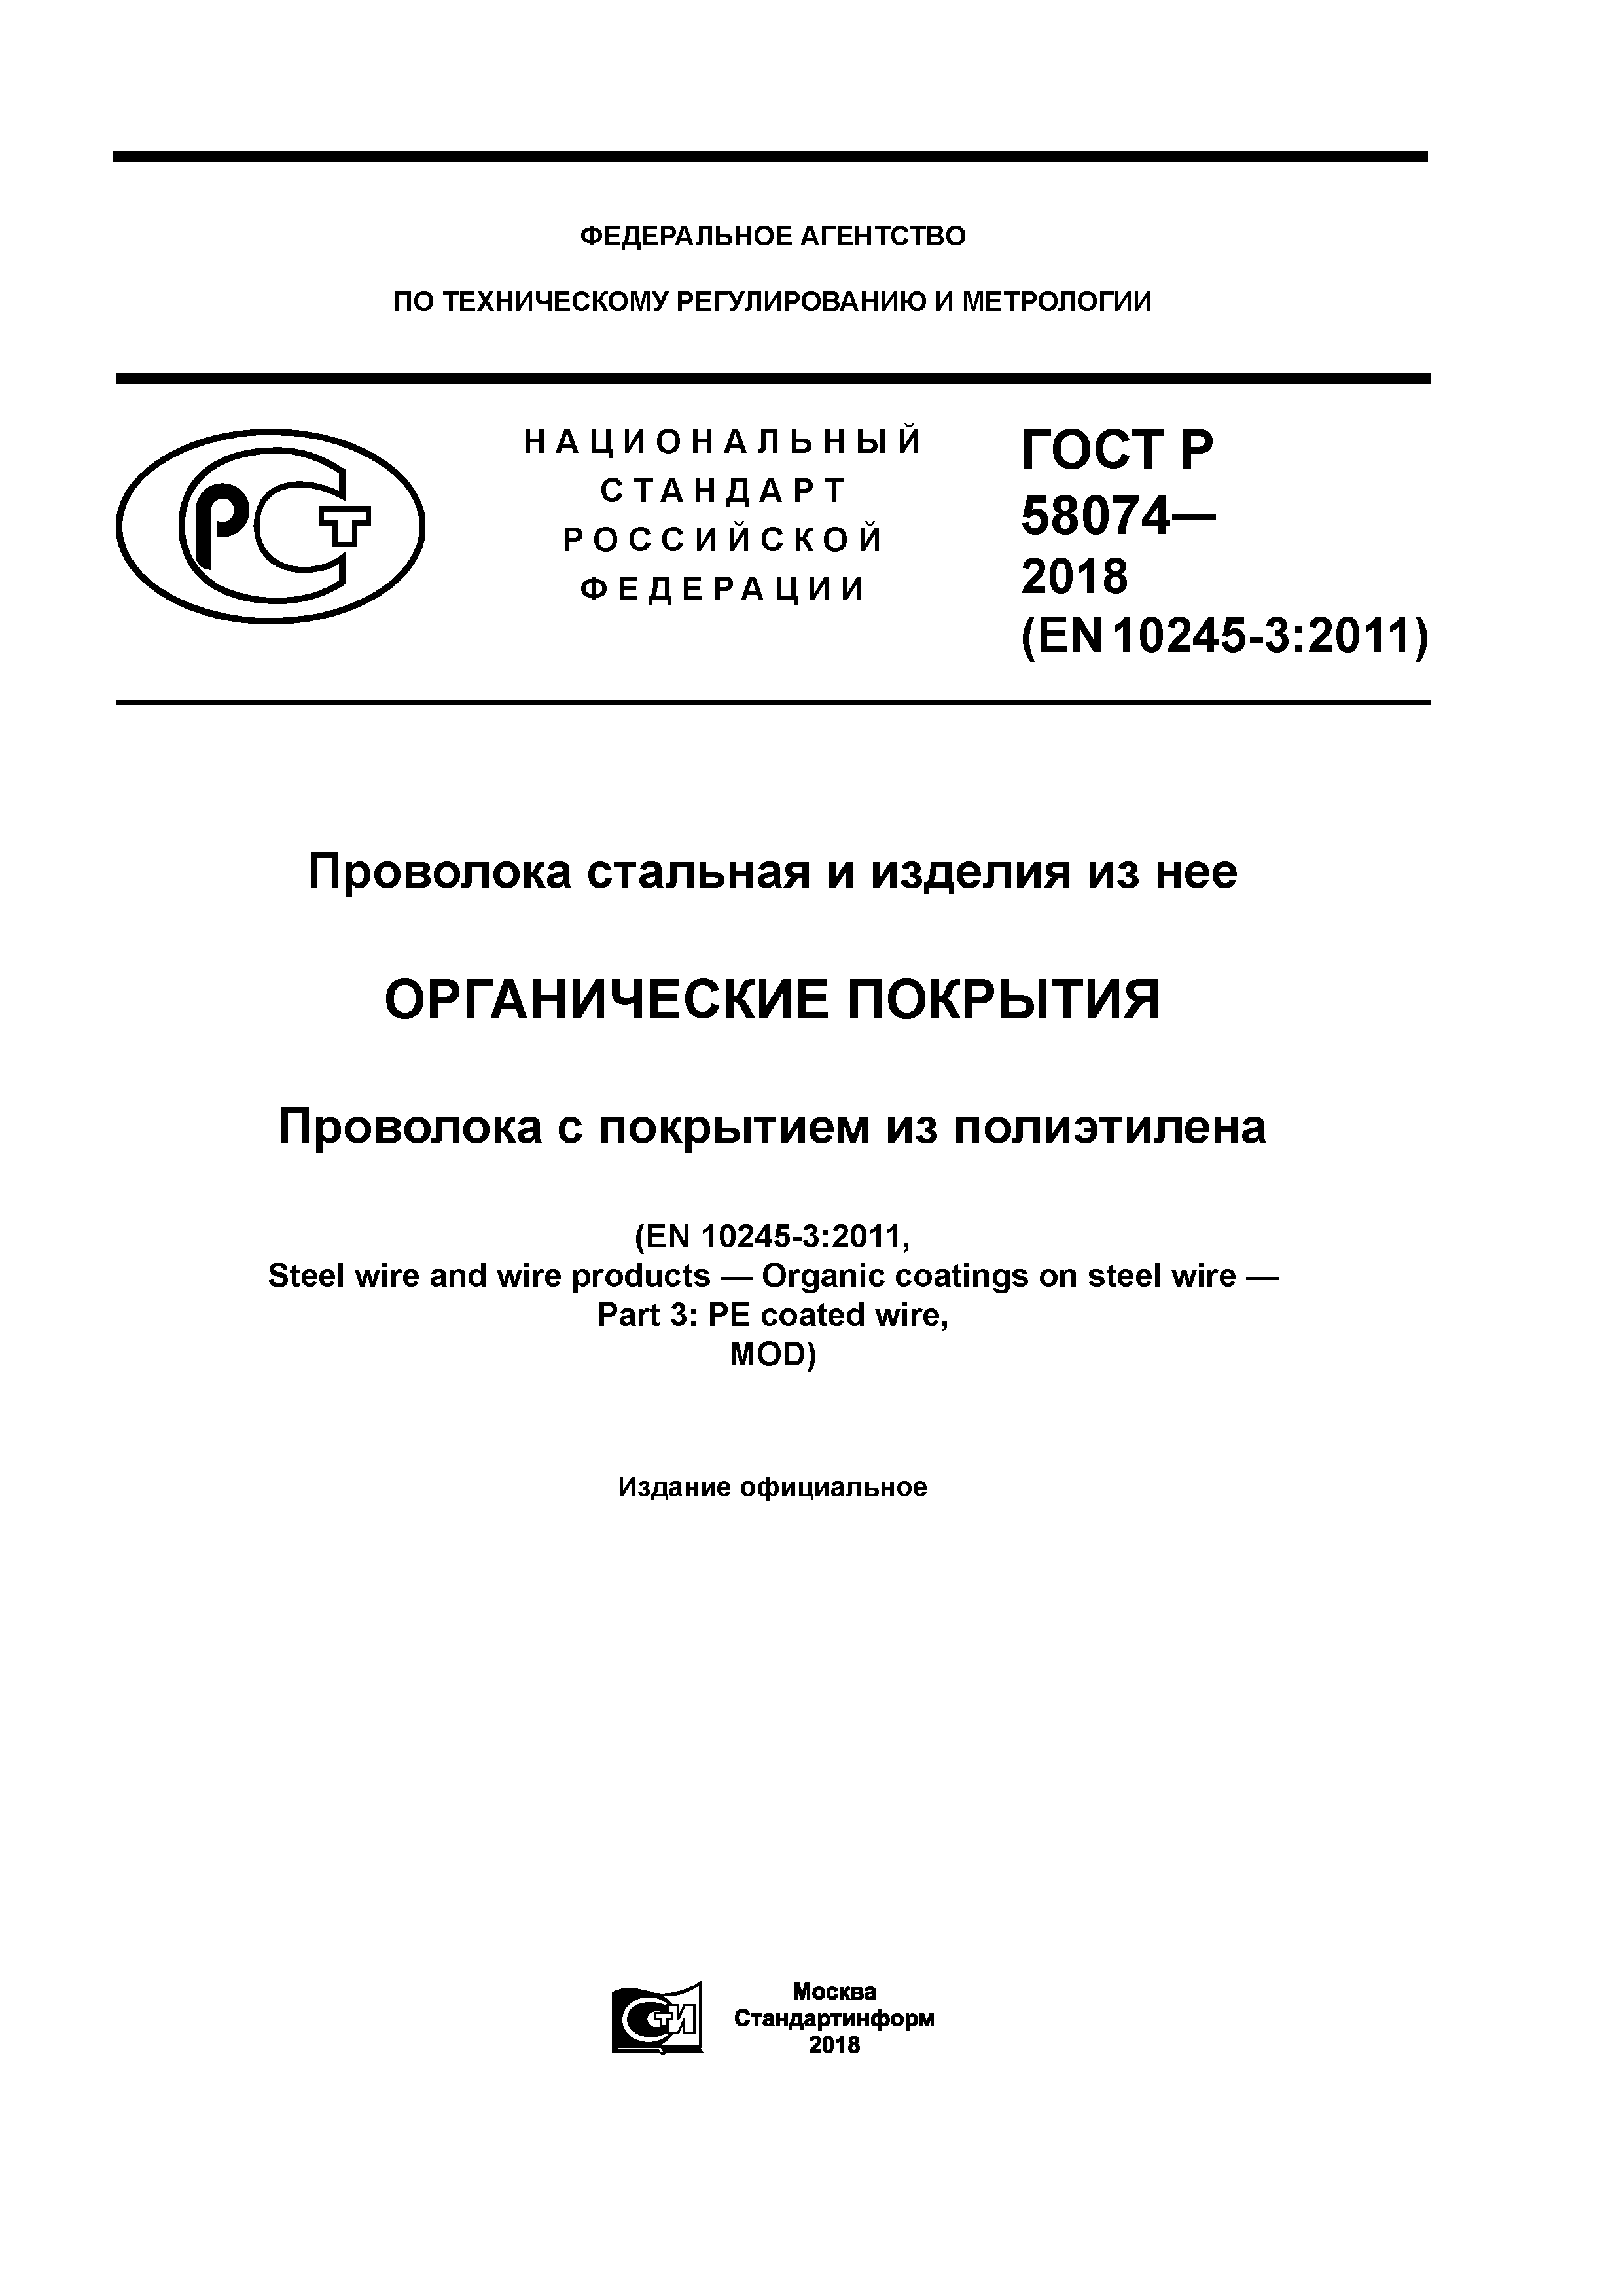 ГОСТ Р 58074-2018